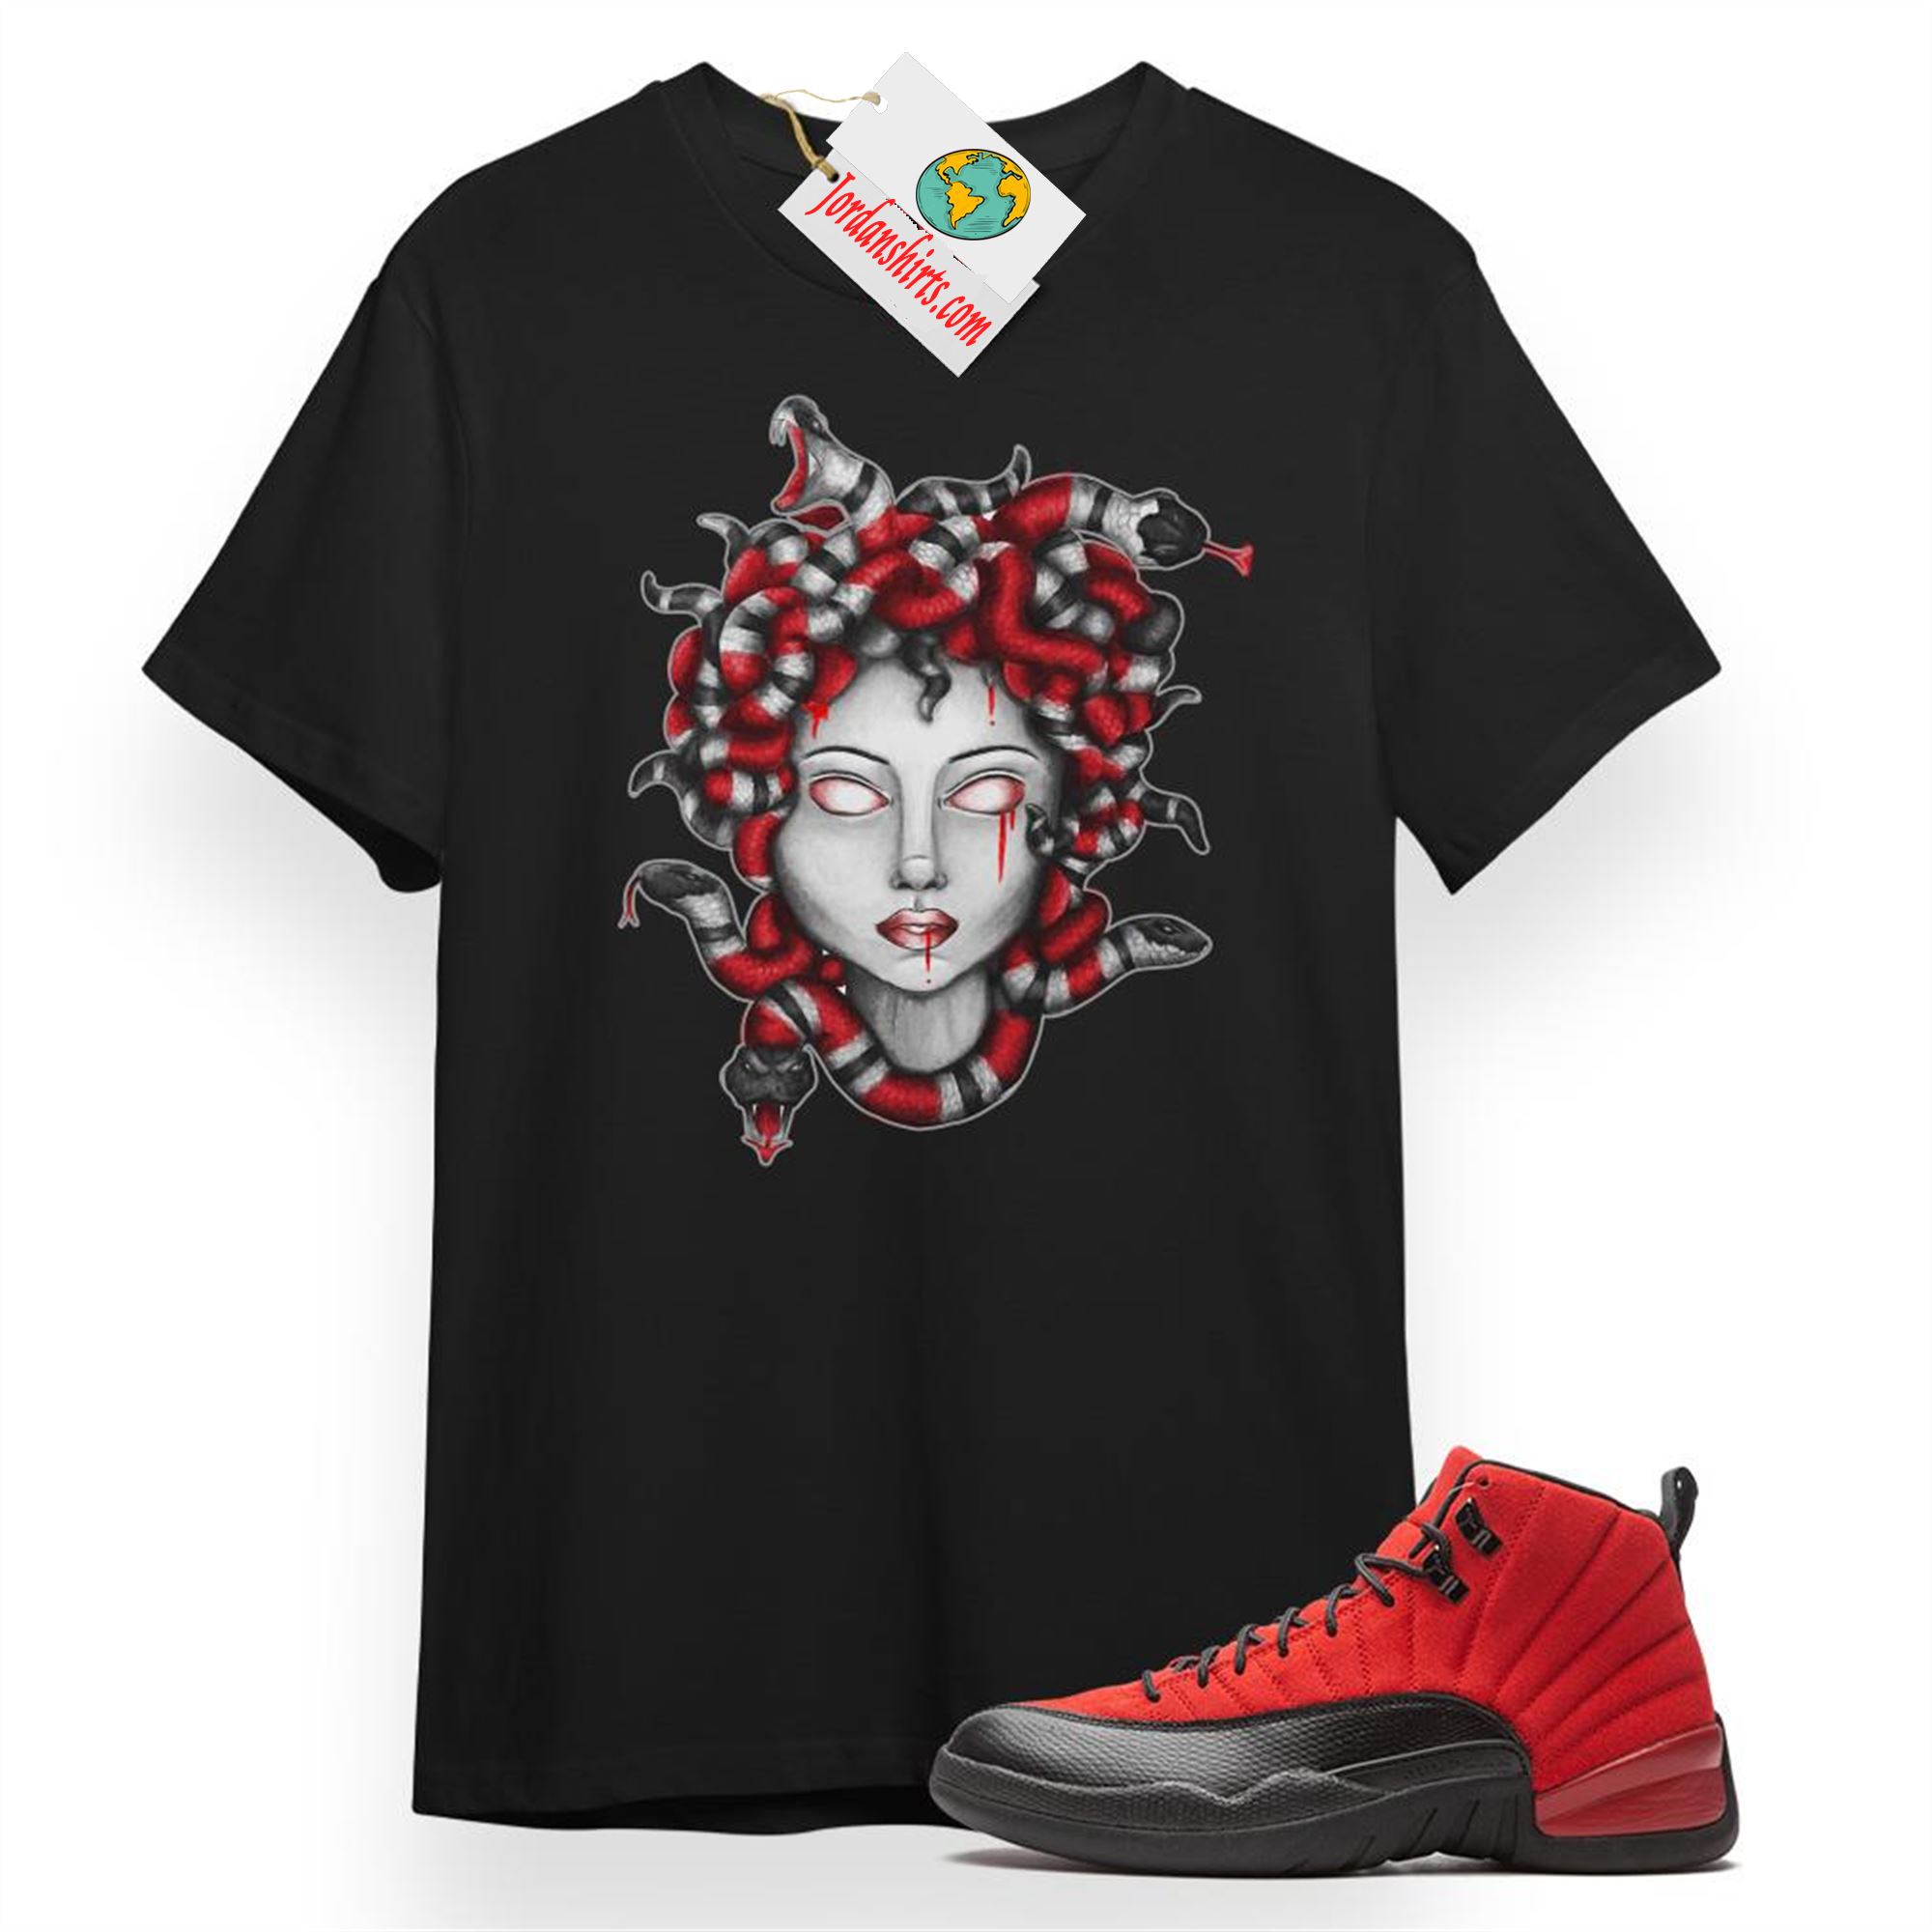 Jordan 12 Shirt, Medusa Snake Black T-shirt Air Jordan 12 Reverse Flu Game 12s Size Up To 5xl